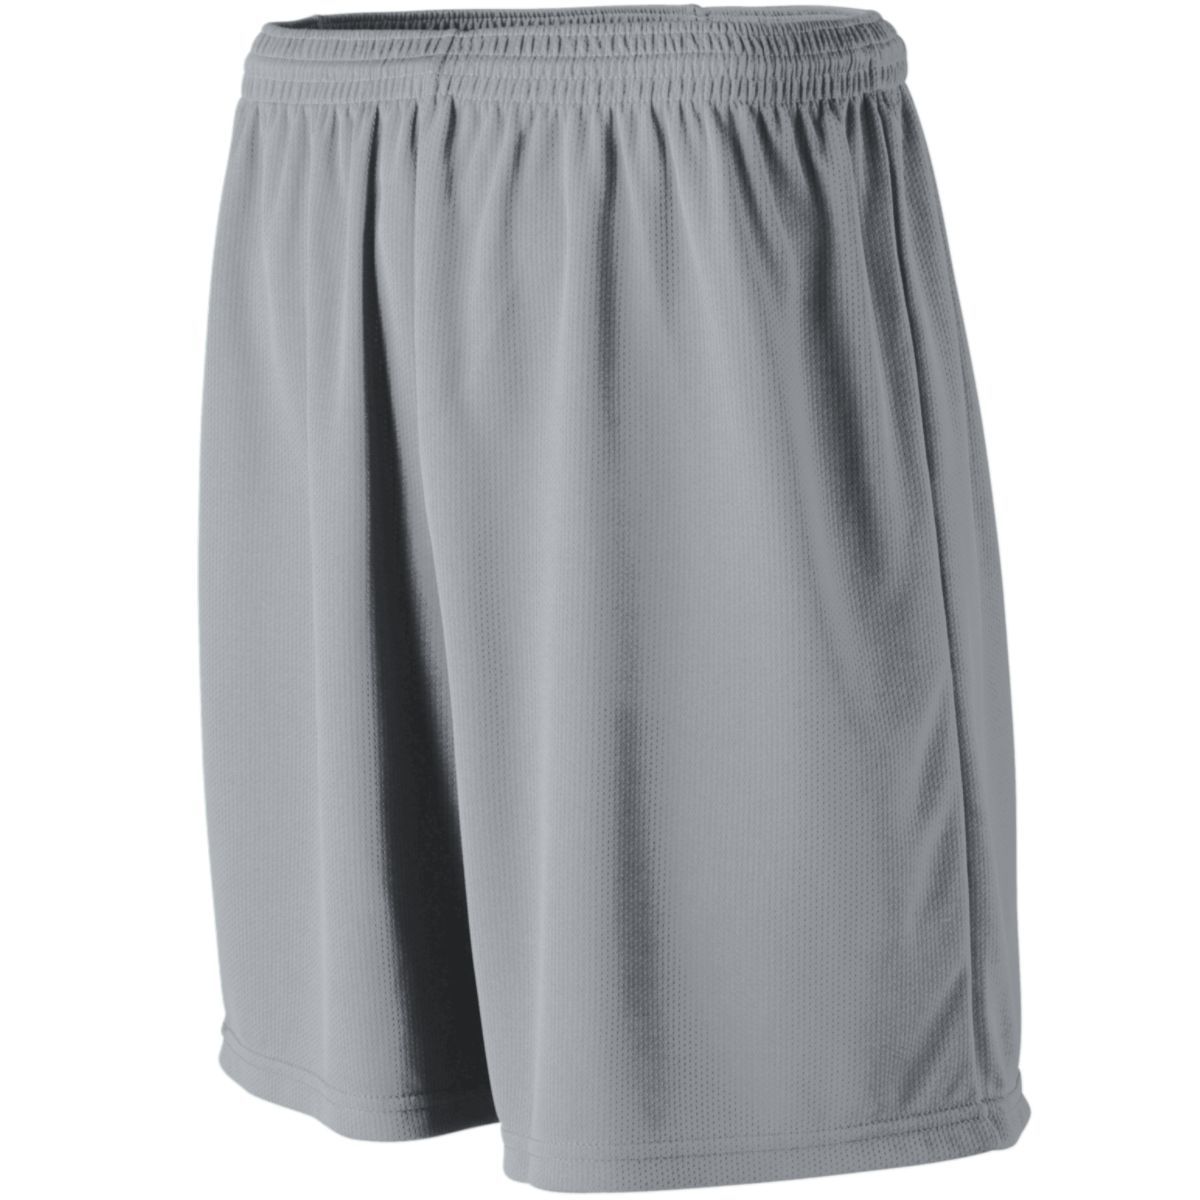 Wicking Mesh Athletic Shorts - 805